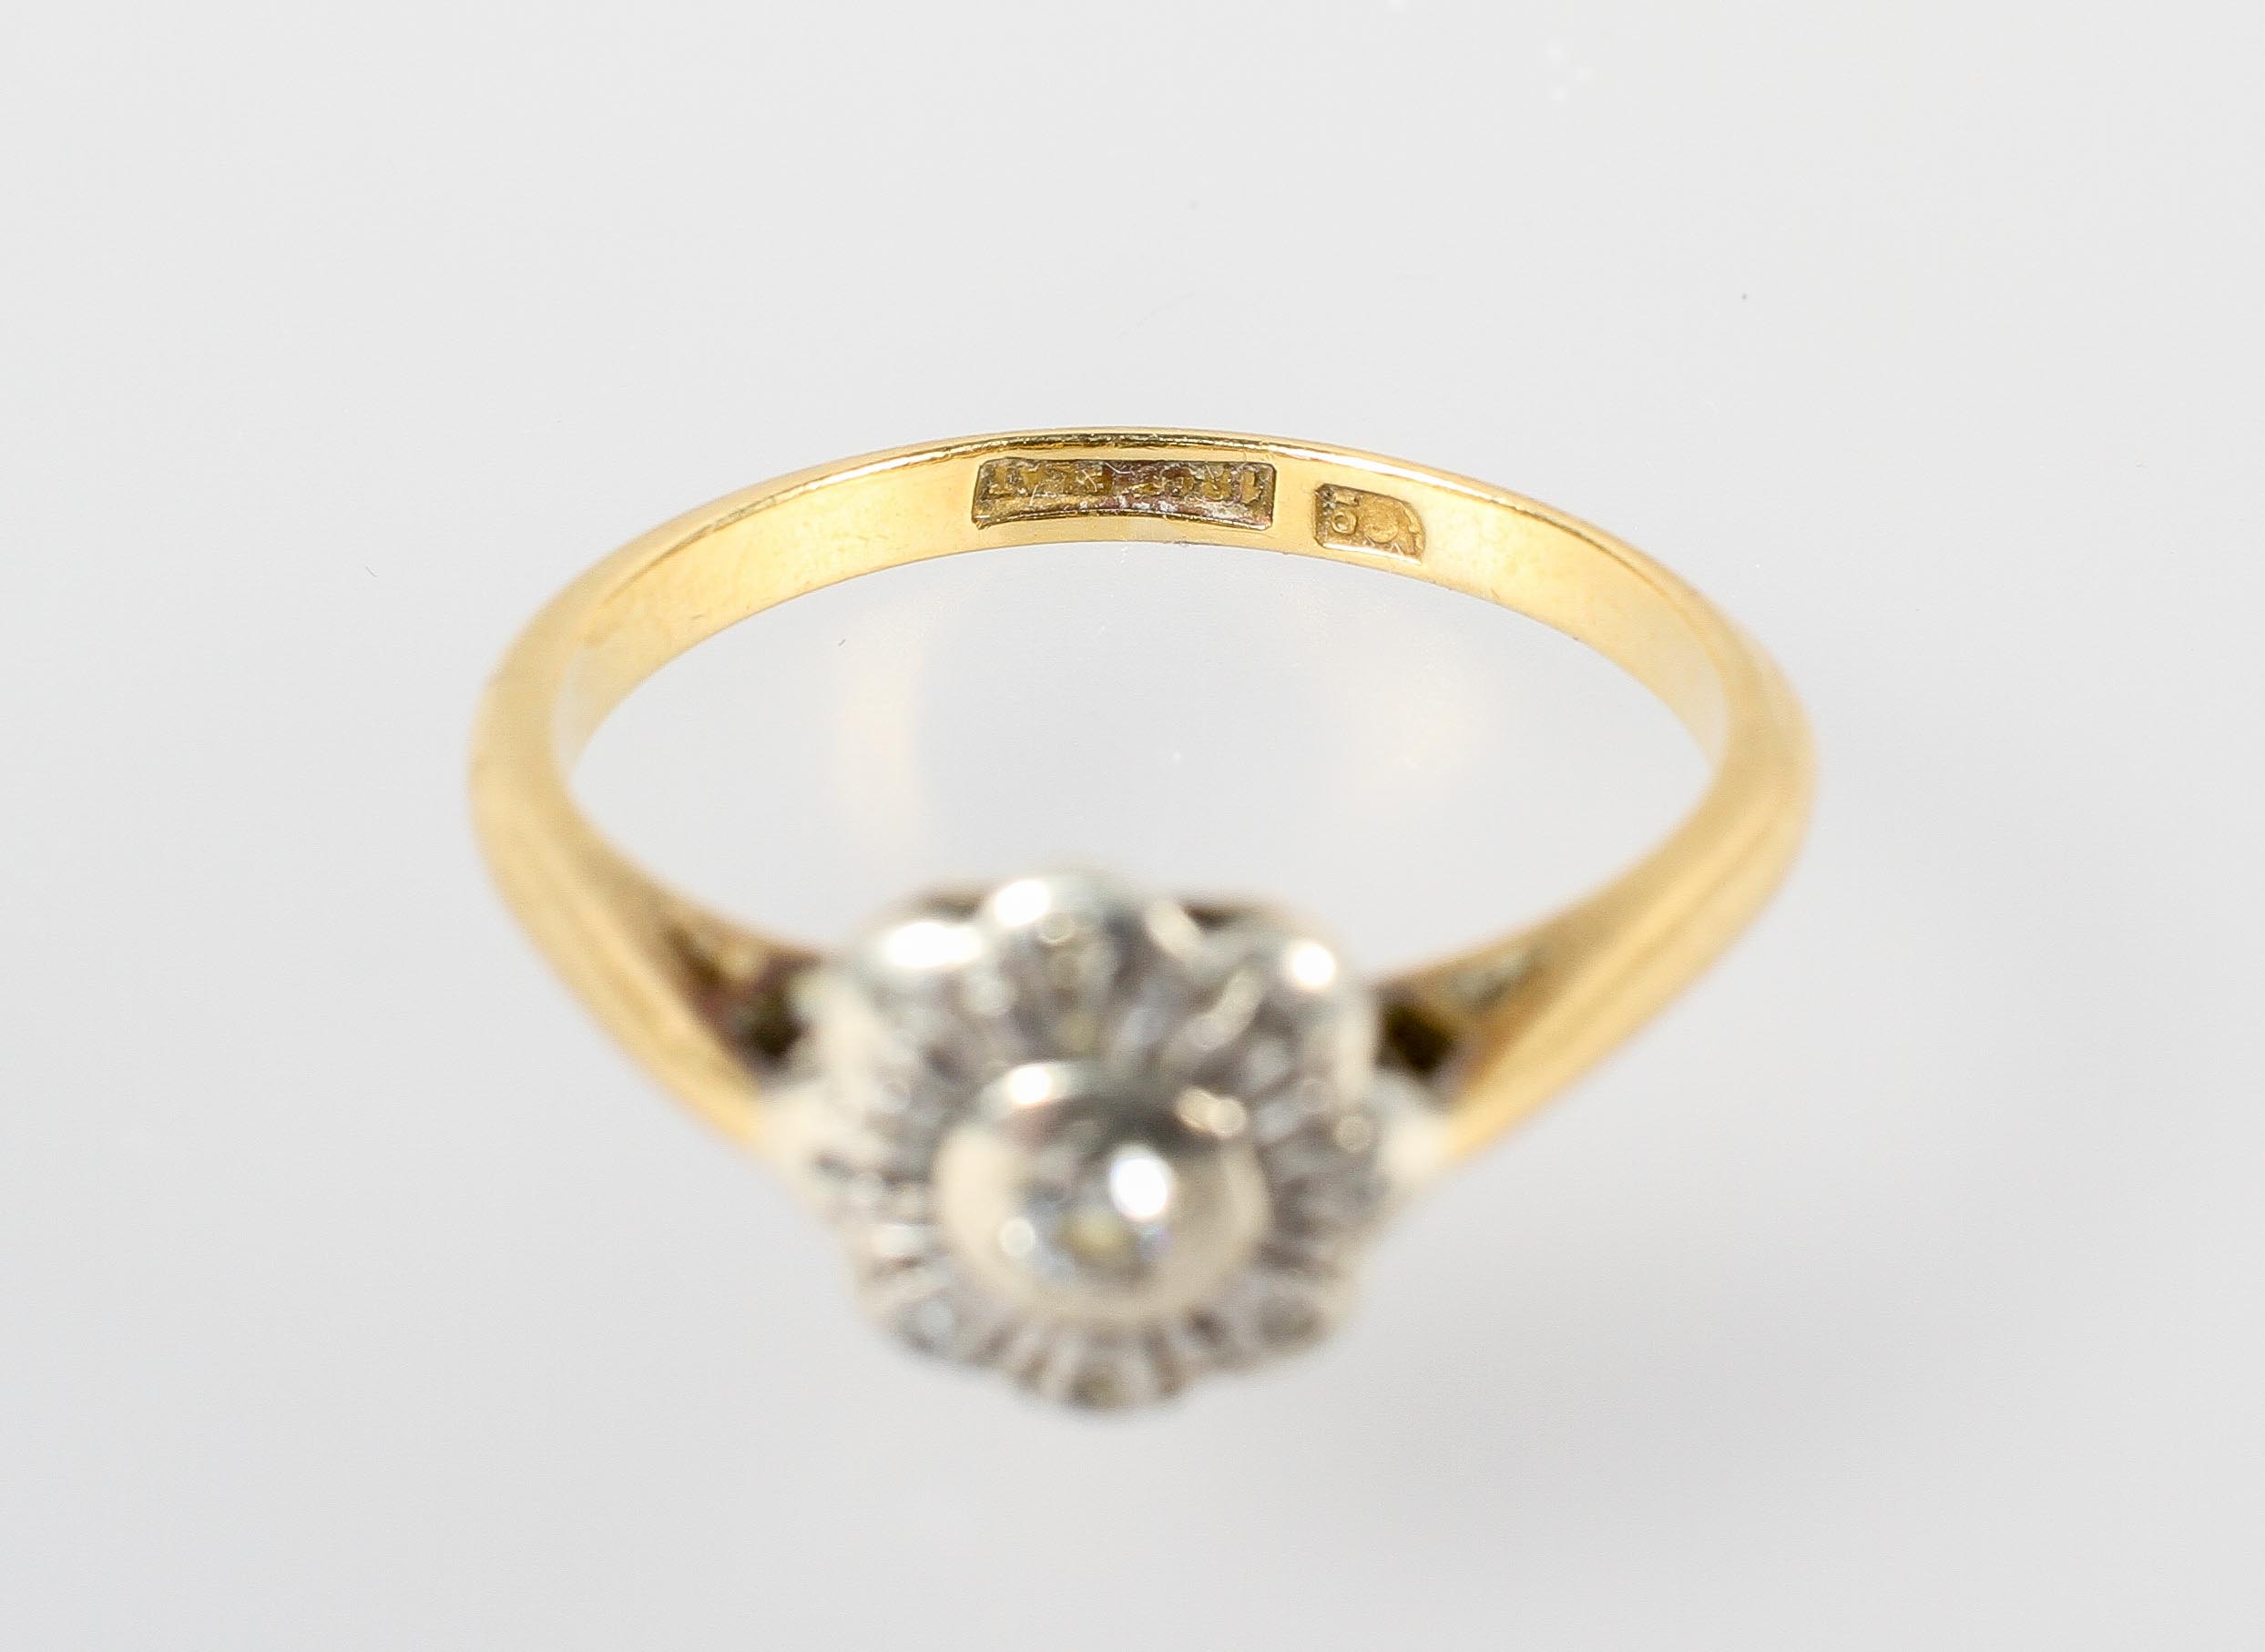 A yellow and white metal illusion set single stone diamond ring. No hallmark - stamped 18ct Plat. - Image 3 of 3